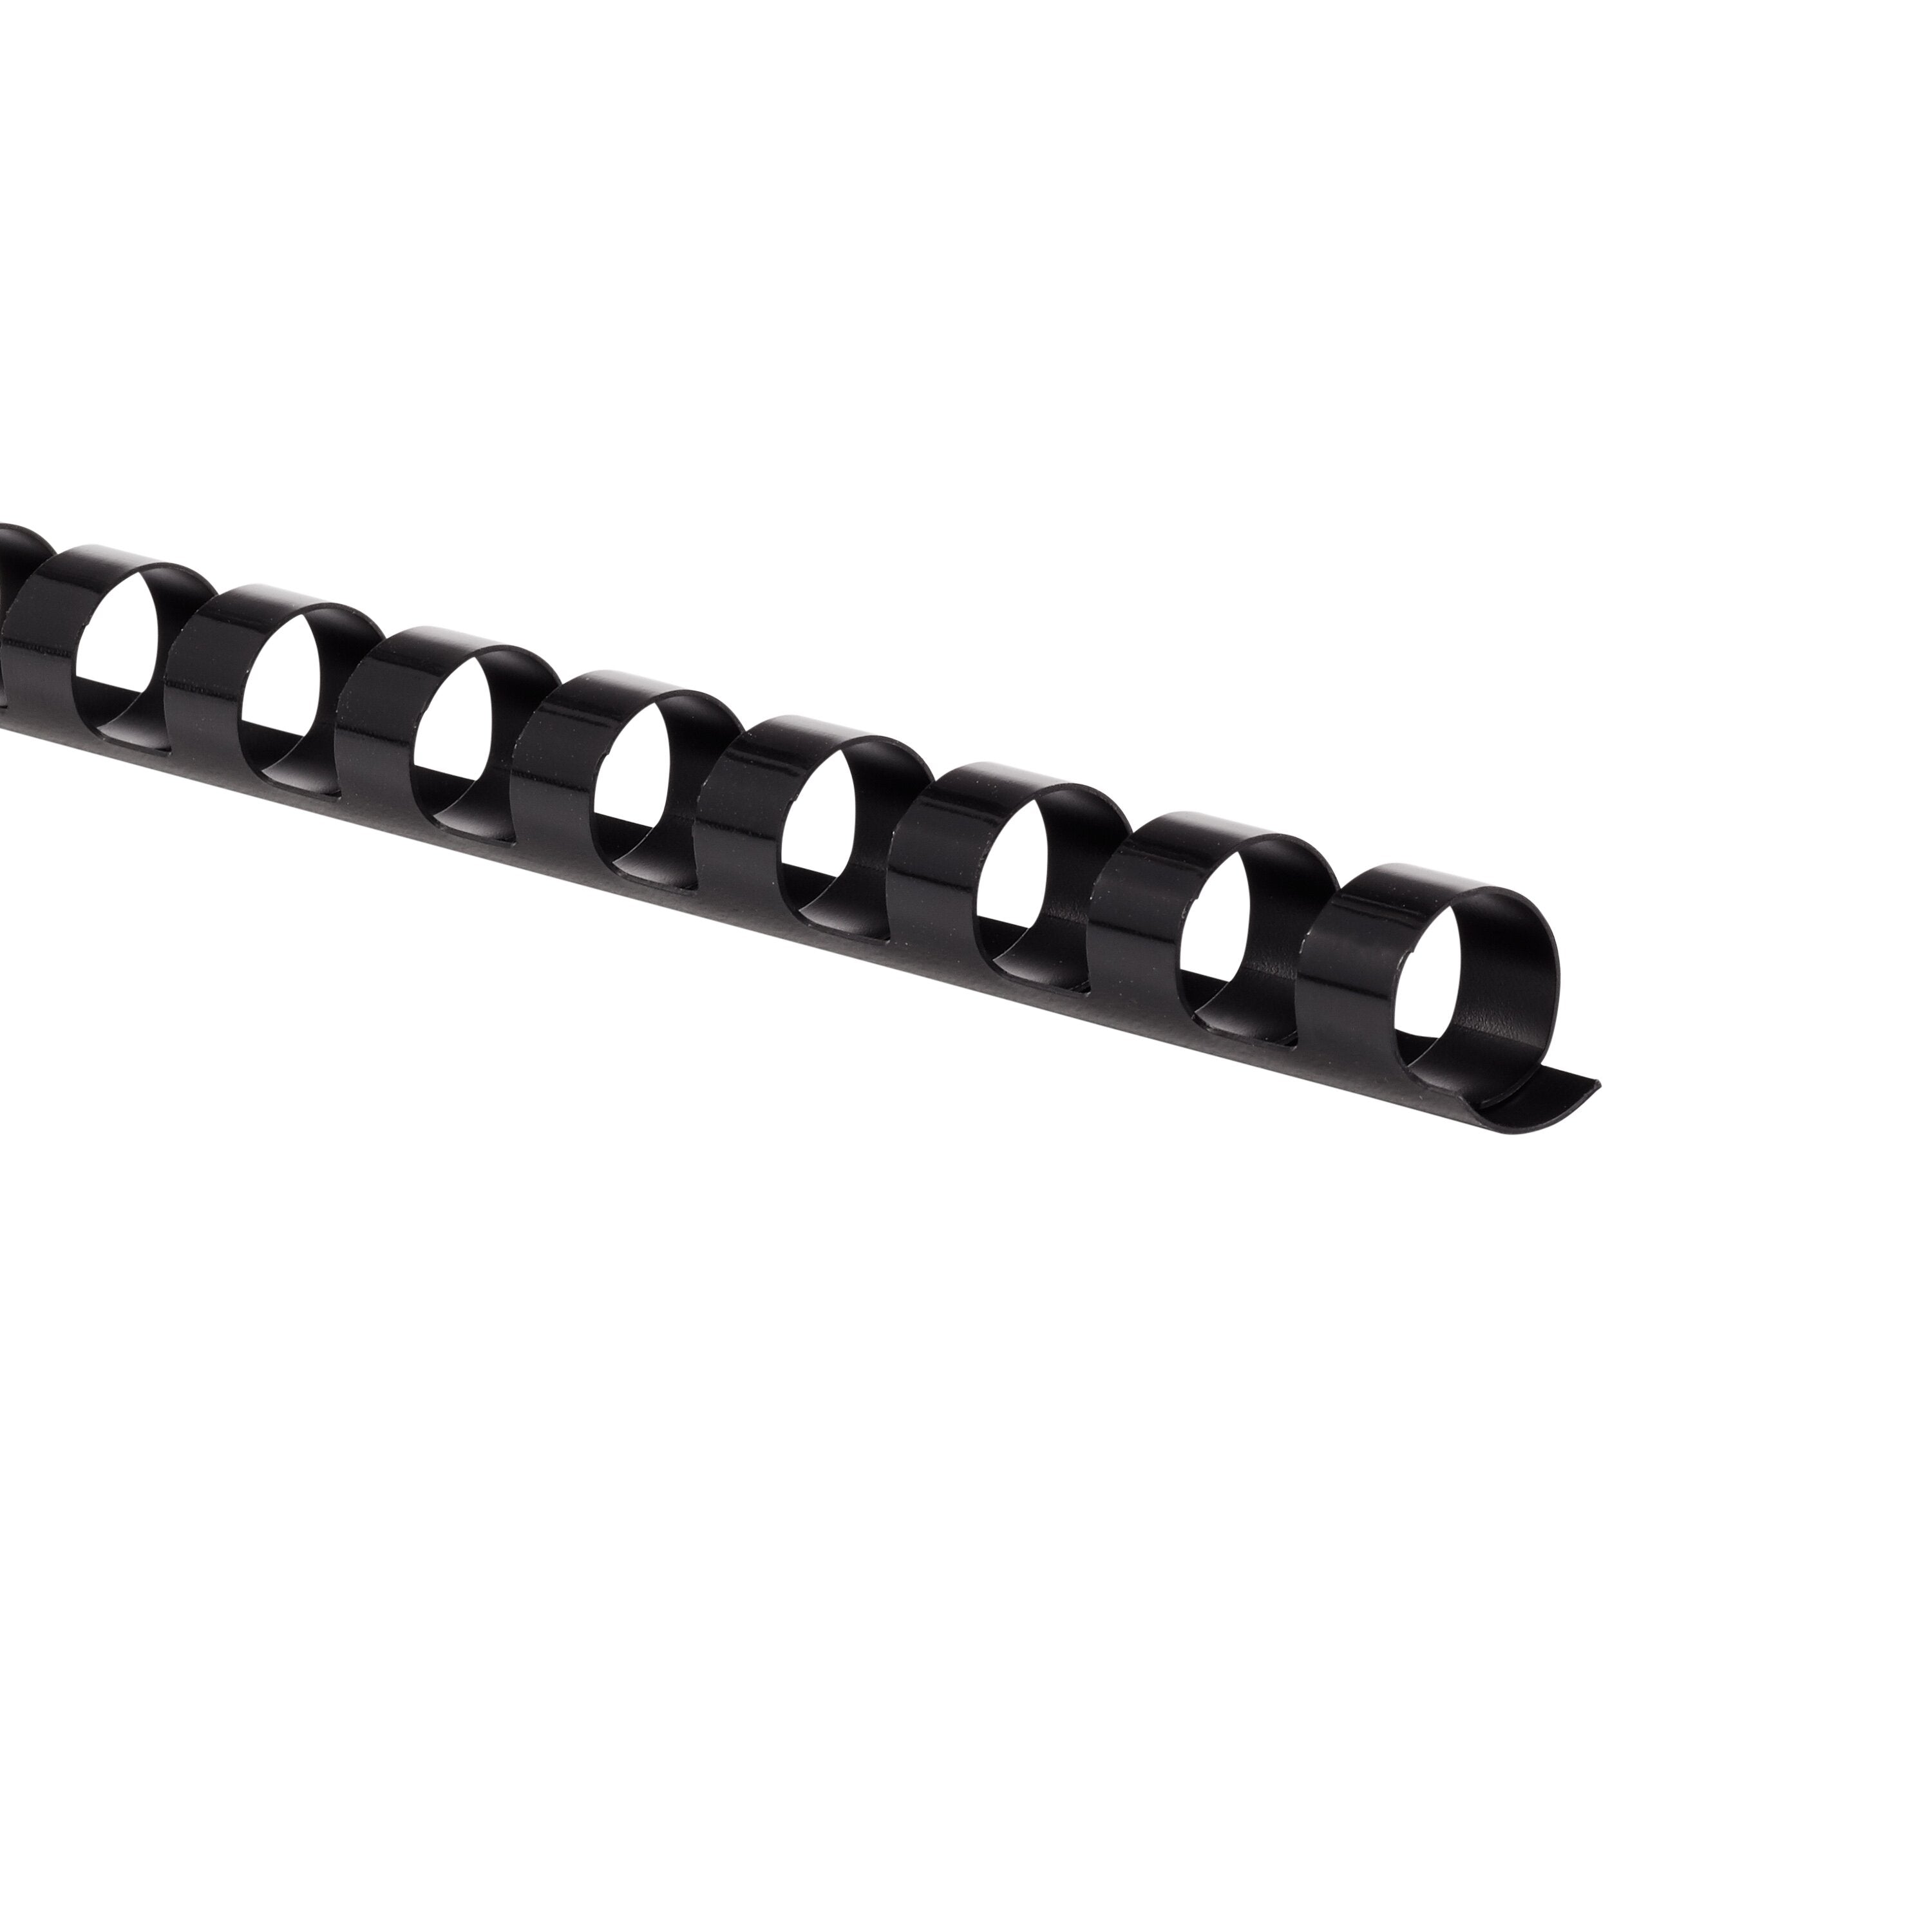 Mead CombBind 3/8" Black Binding Spines (125 Pack)